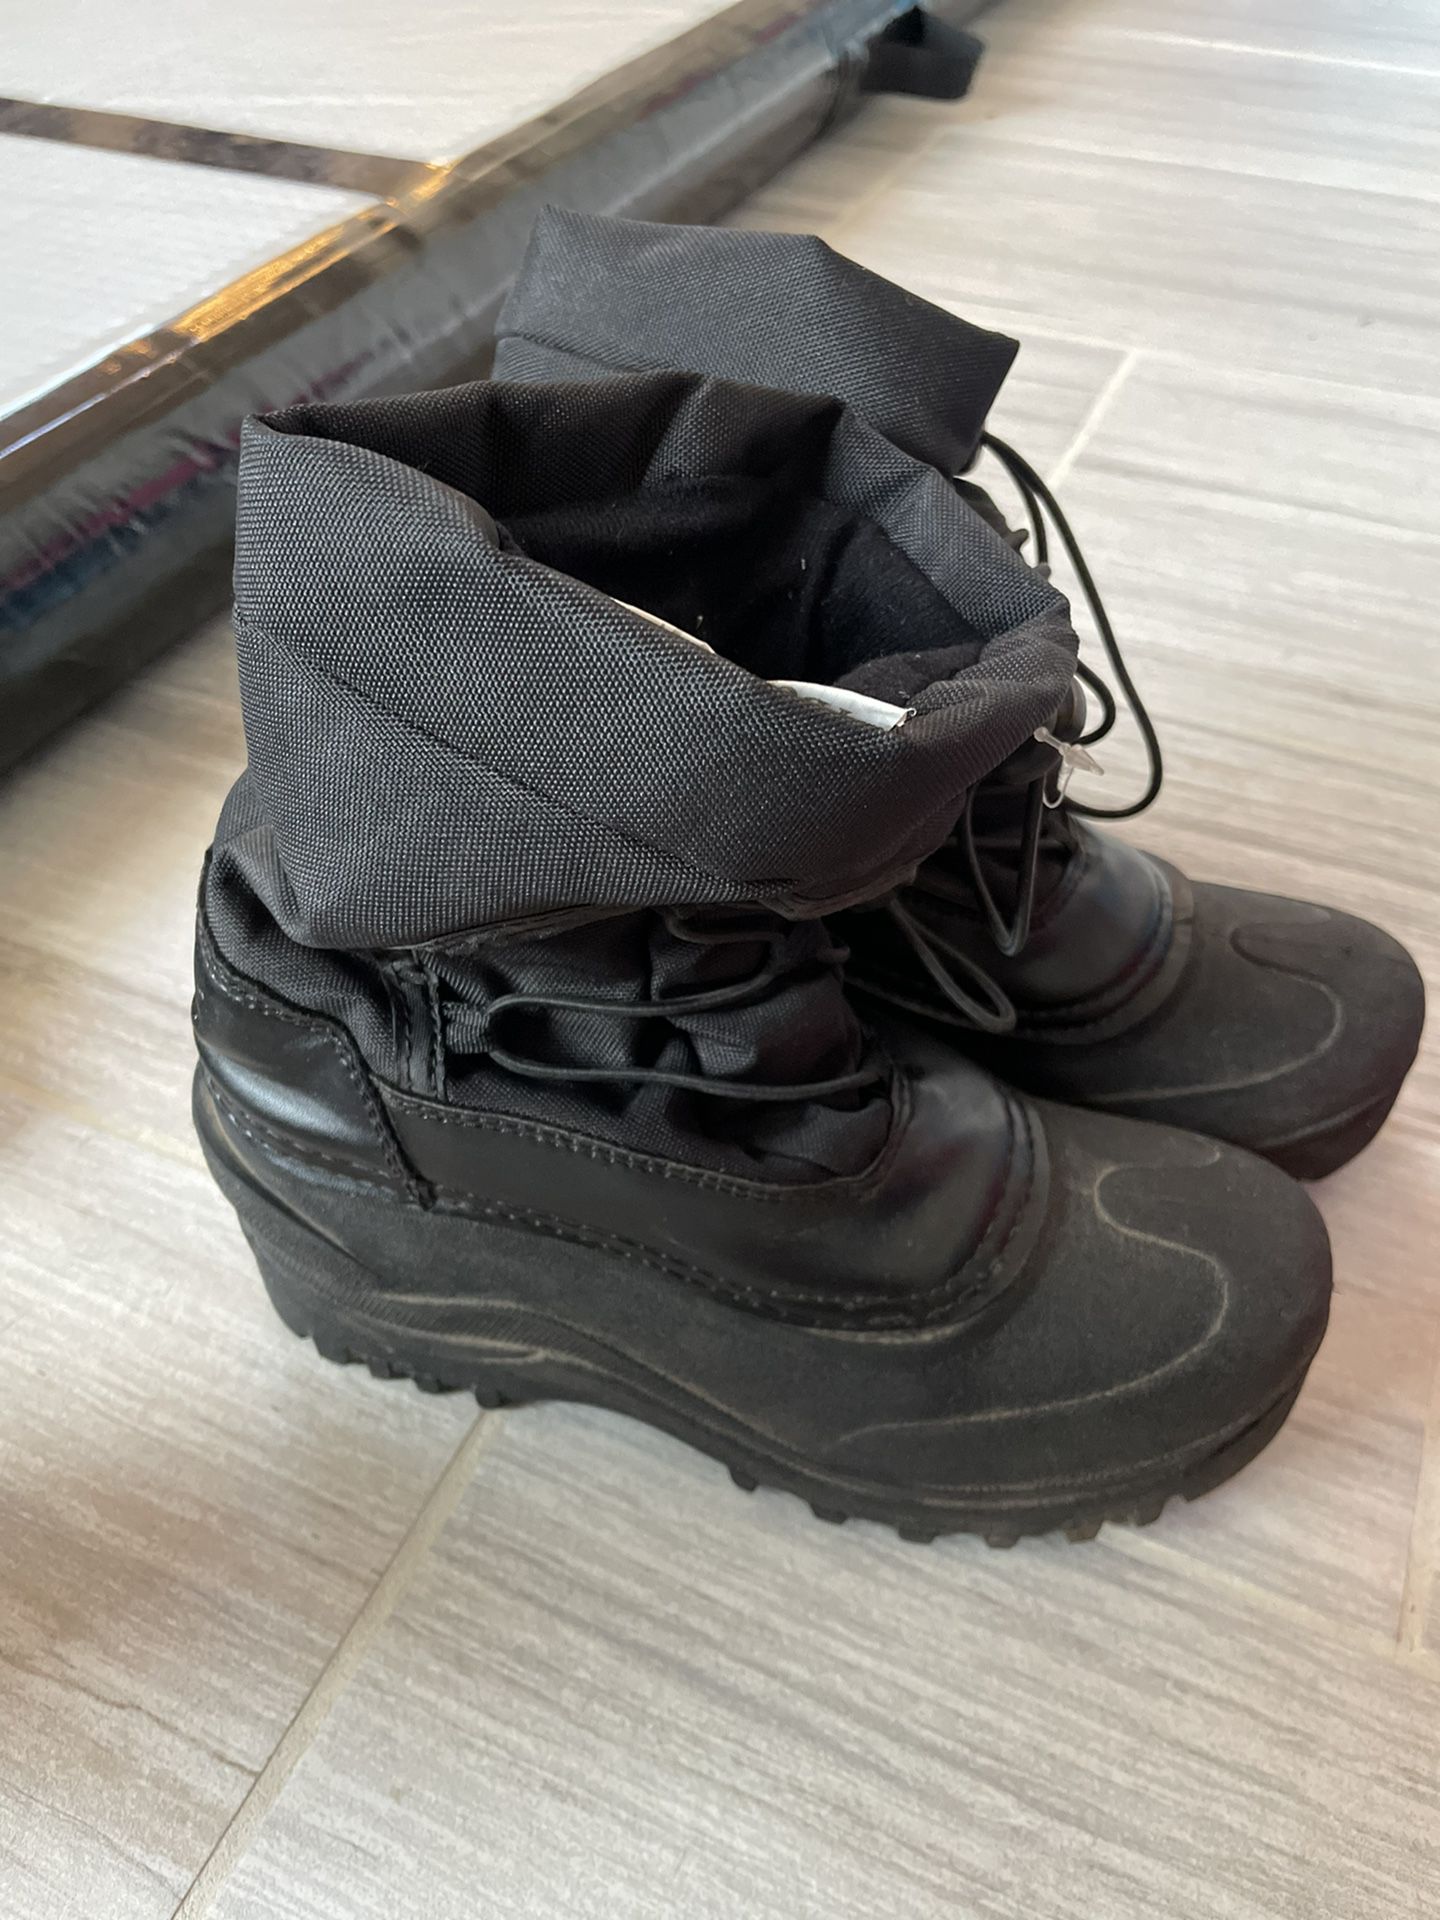 Boys Snow boots Size 3